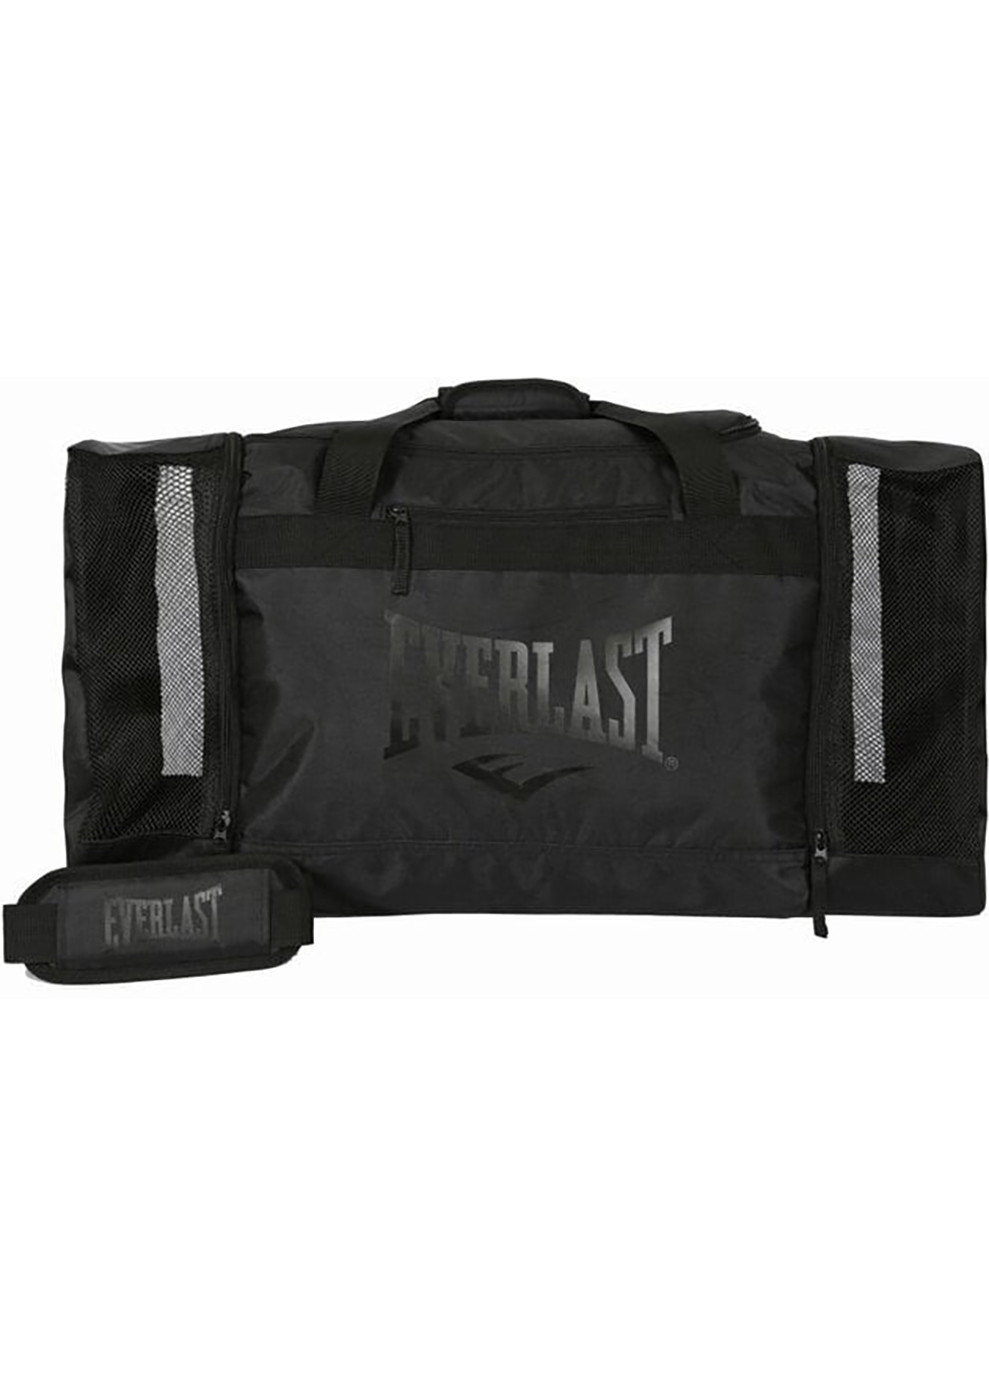 Спортивна сумка Everlast HOLDBALL Чорний Aqua Speed (262600021)